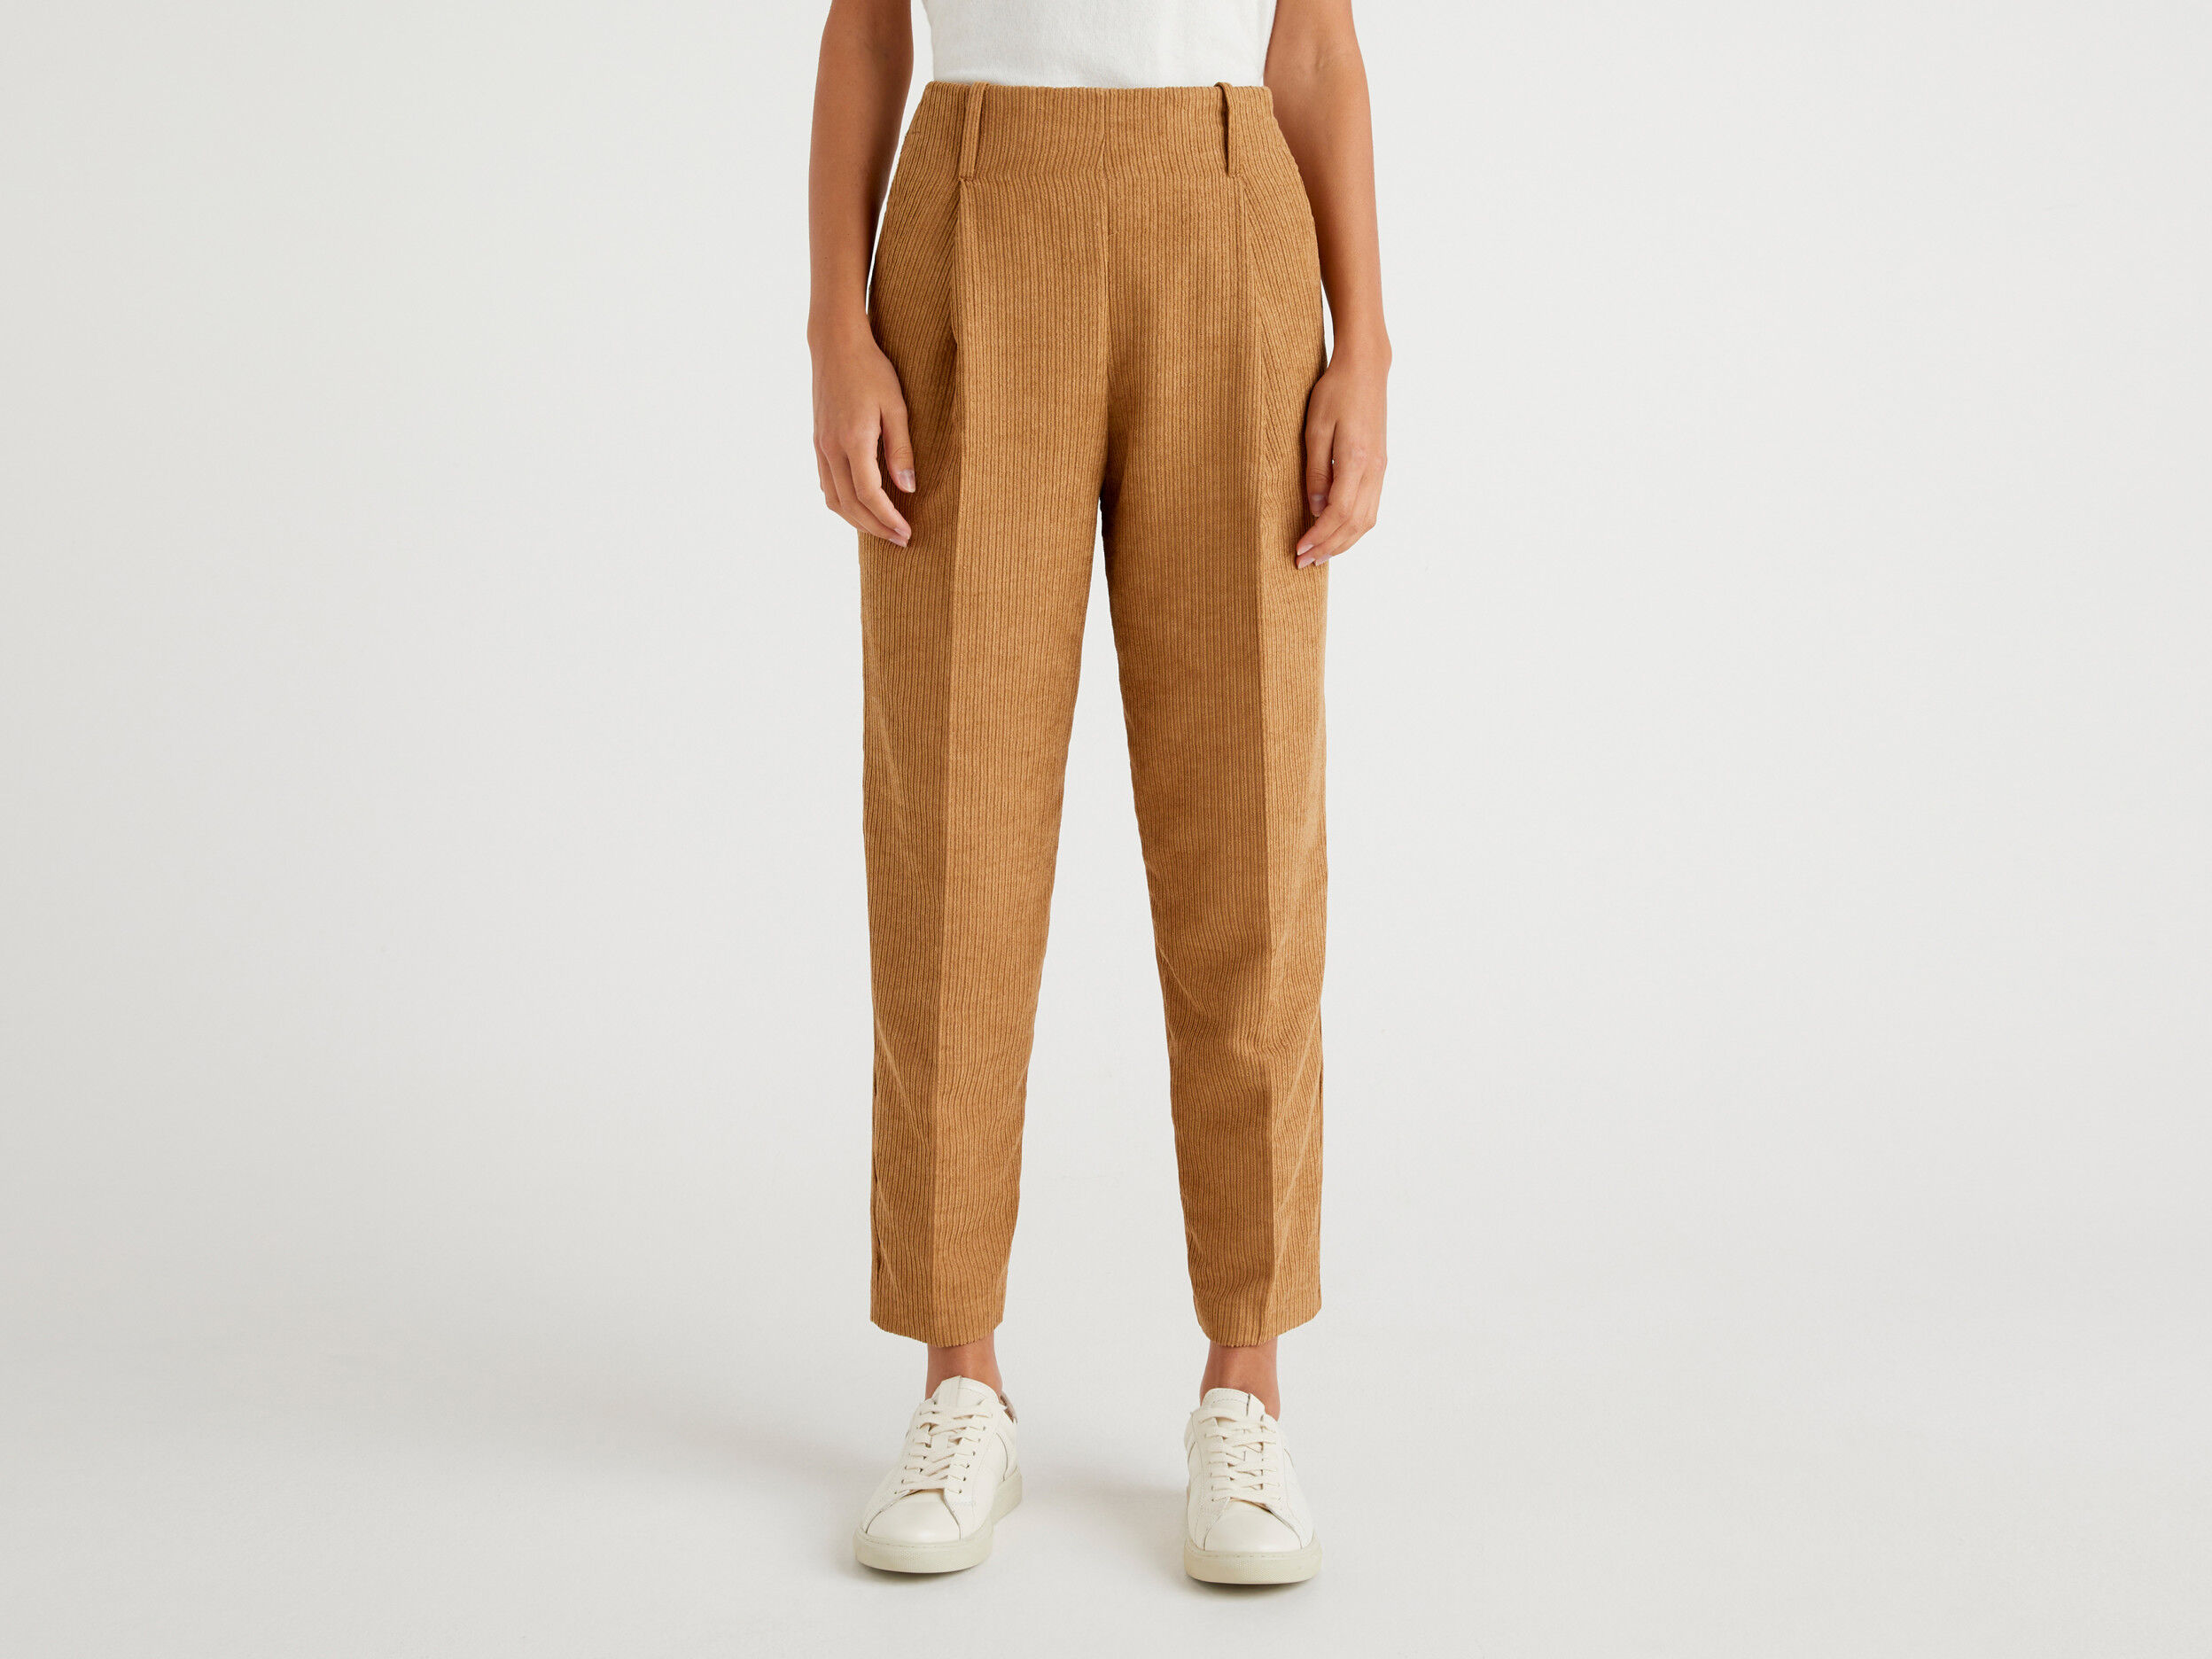 Love Tree Womens Juniors Corduroy High Rise Trouser Pants (Khaki, Medium)  at Amazon Women's Clothing store